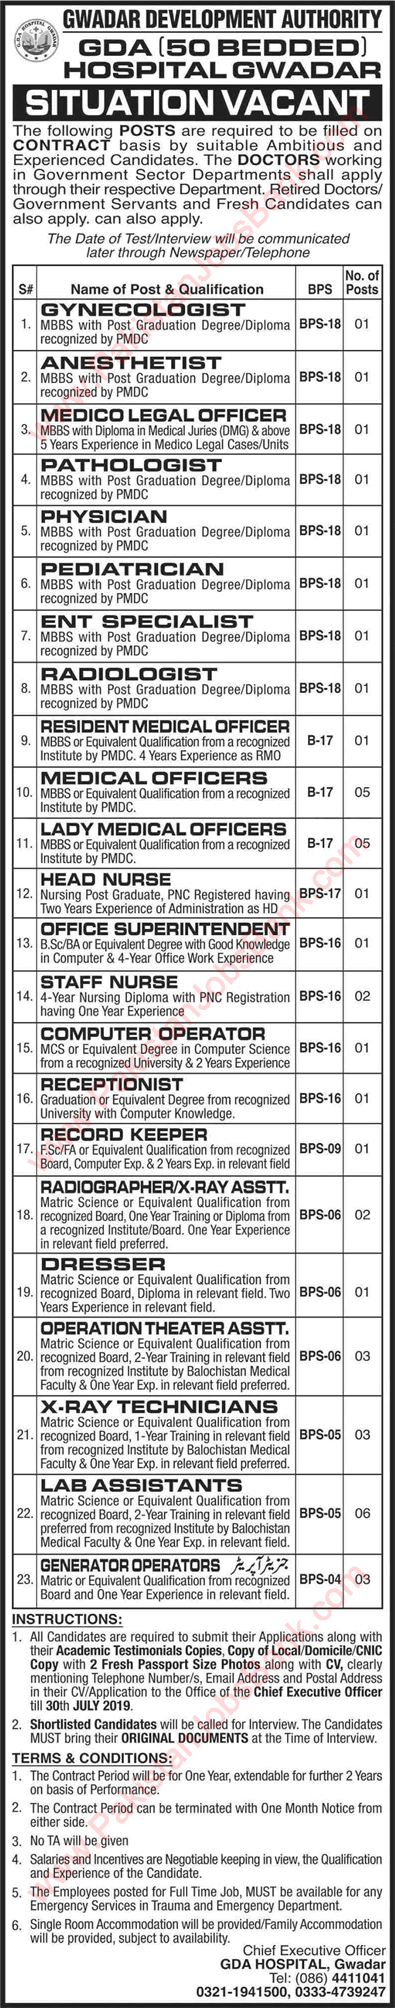 GDA Hospital Gwadar Jobs July 2019 Medical Officers, Technicians & Others Latest